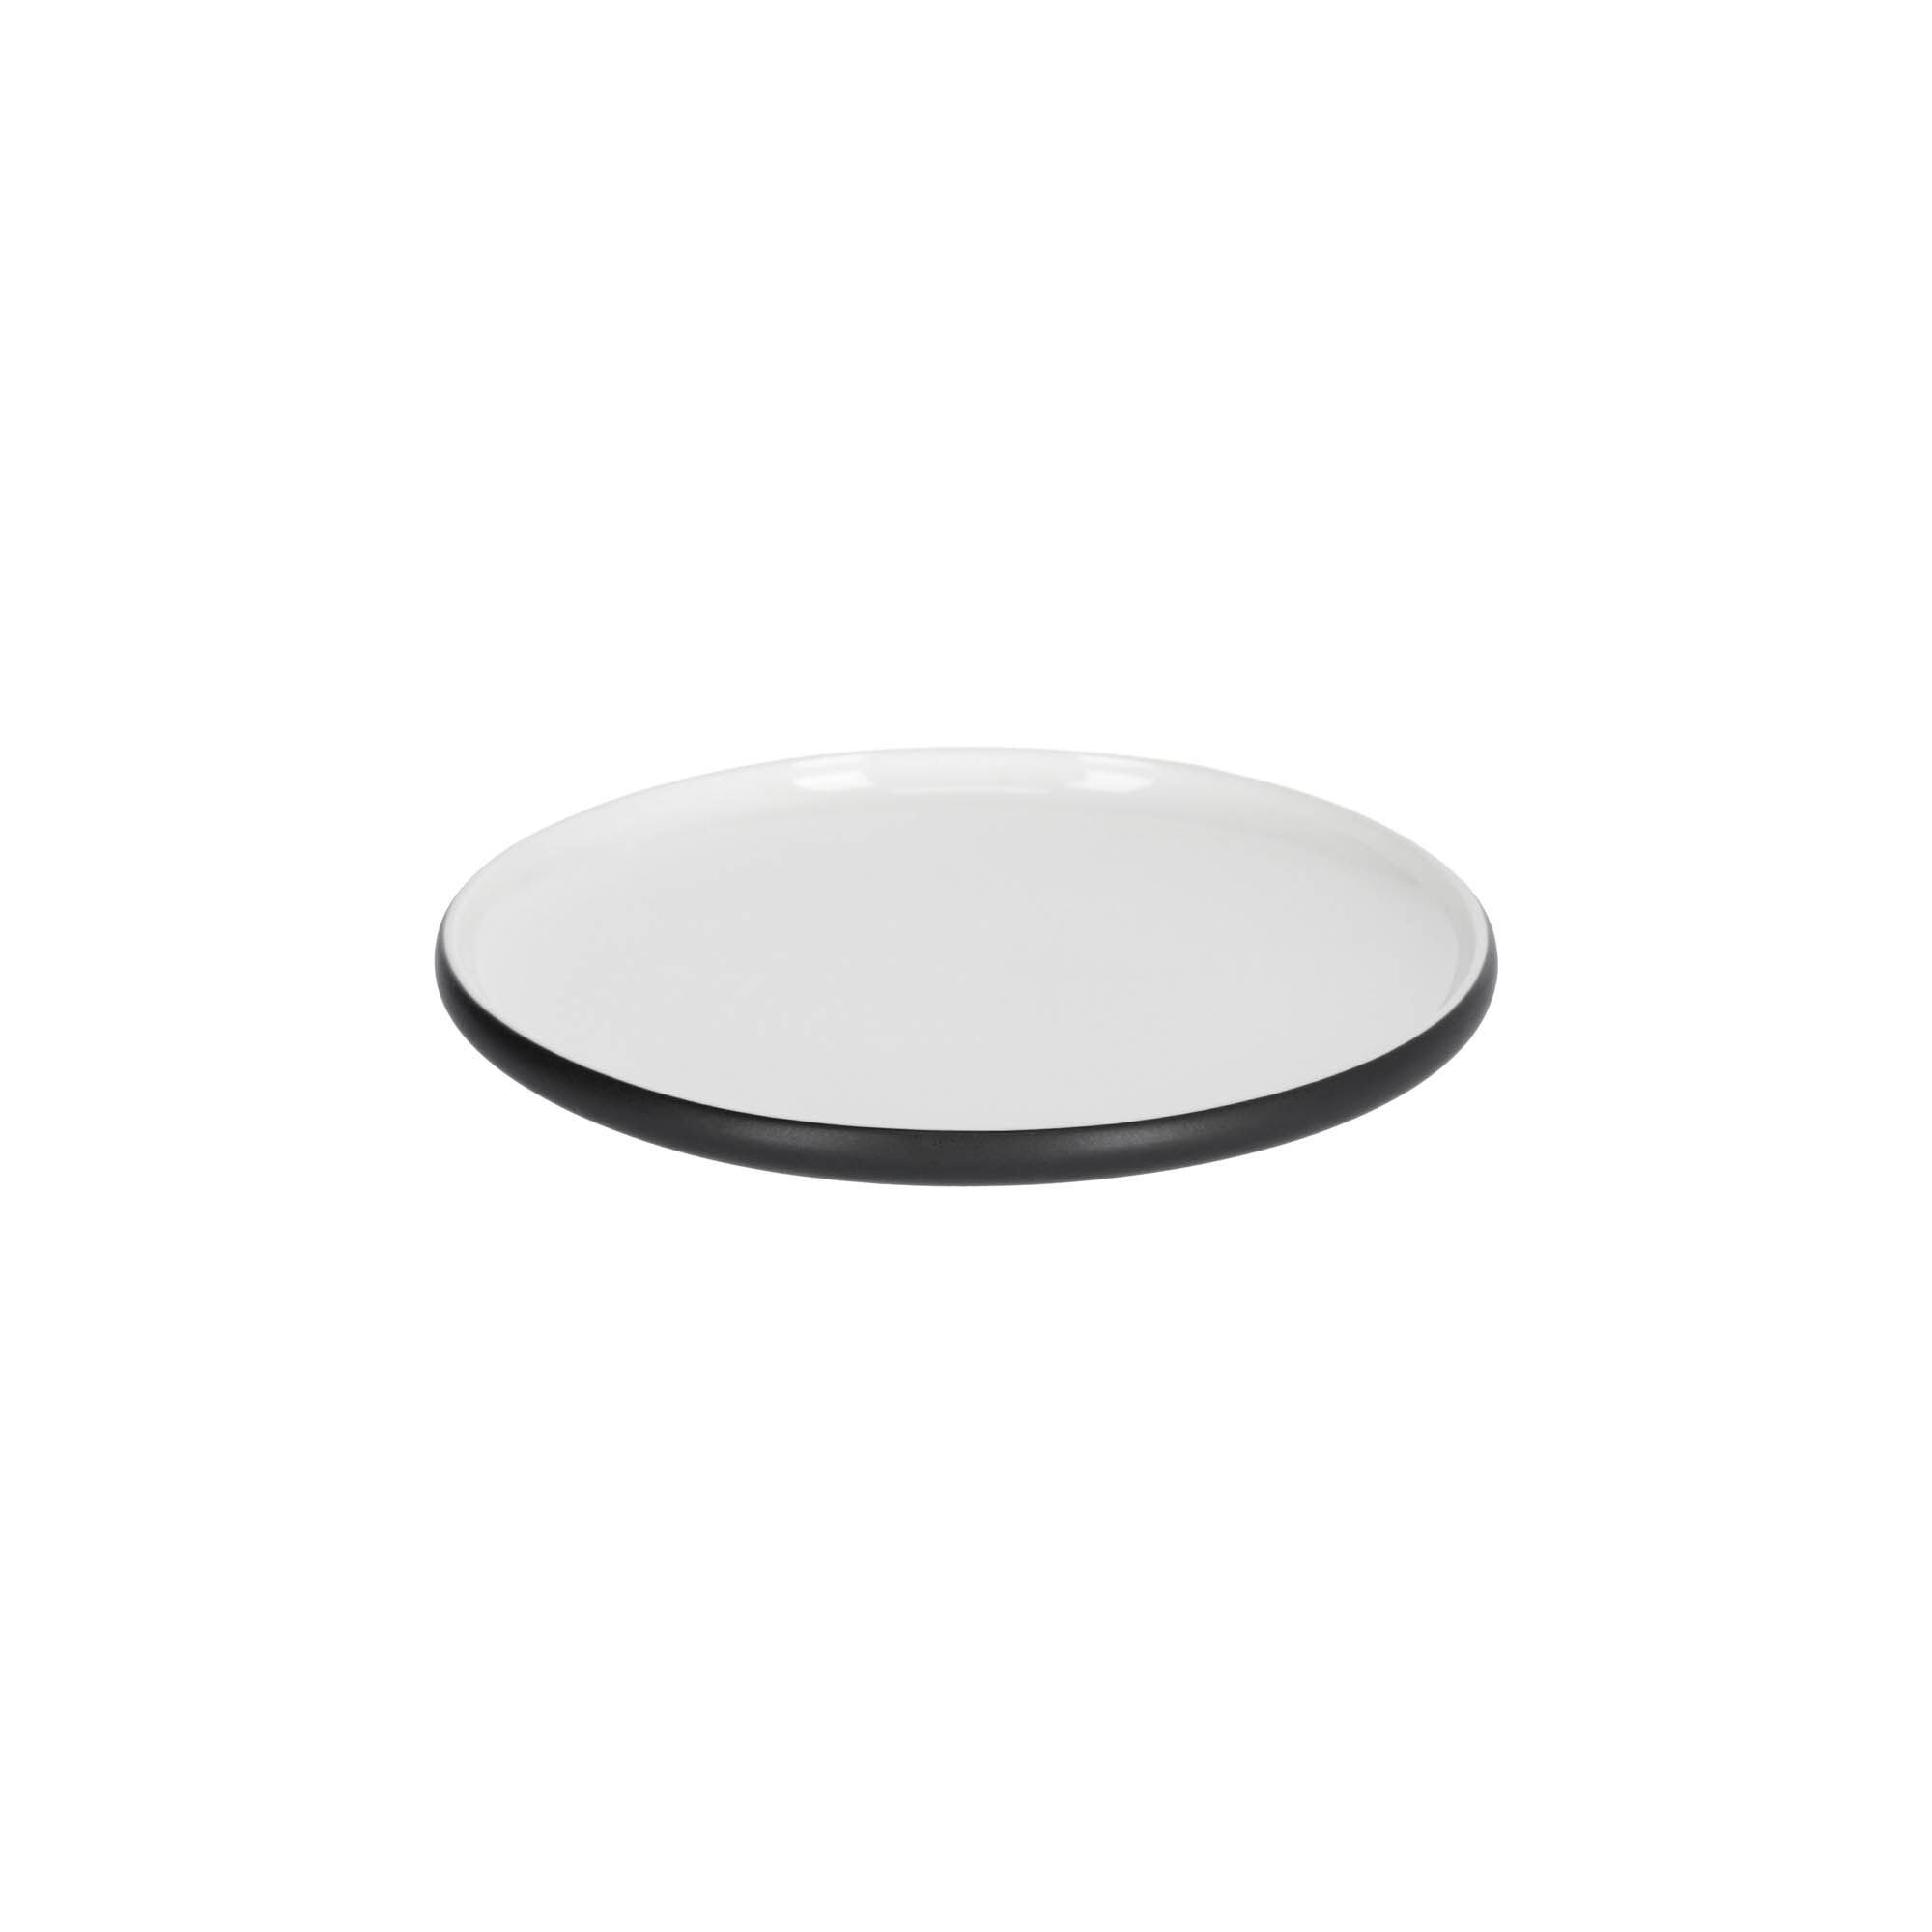 Kave Home Sadashi porcelain dessert plate in black and white